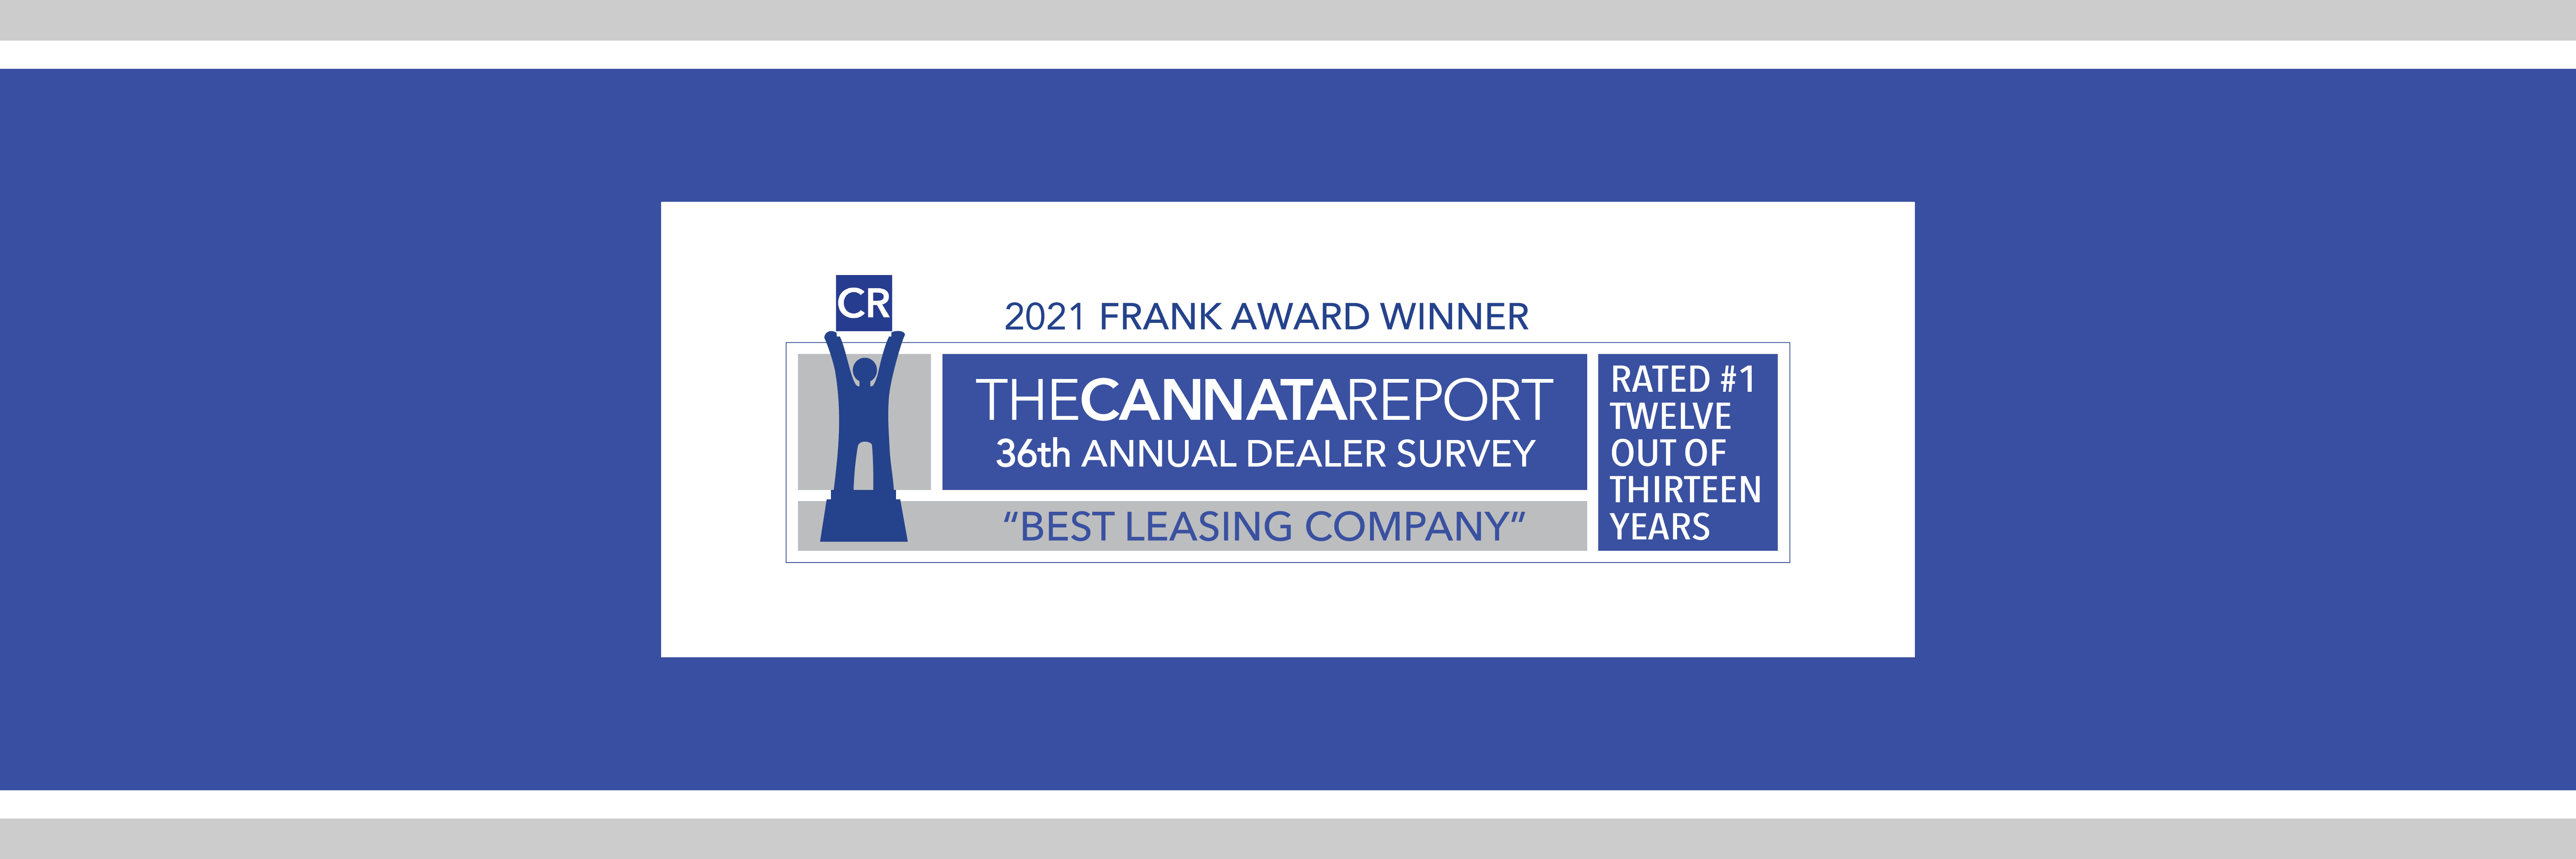 GreatAmerica Wins Frank Award for Best Leasing Company in 2021